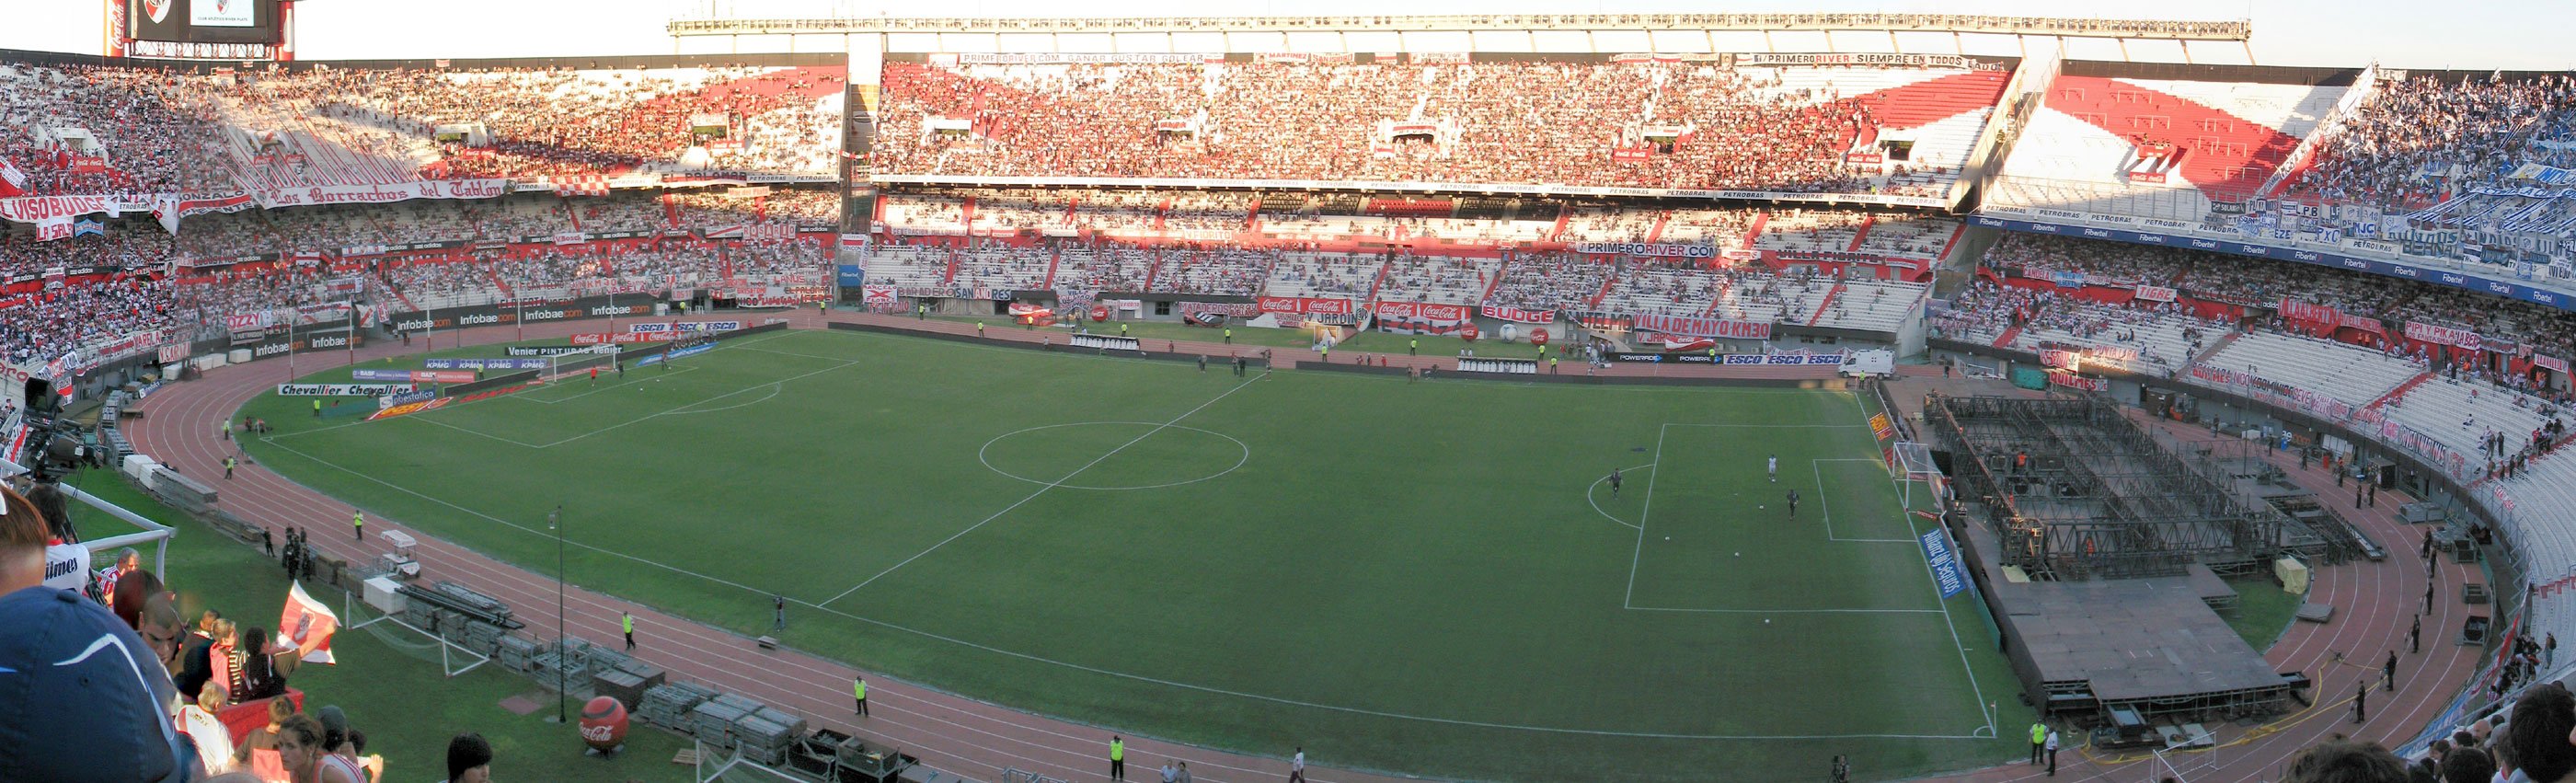 Stade Monumental, Buenos Aires, Argentine